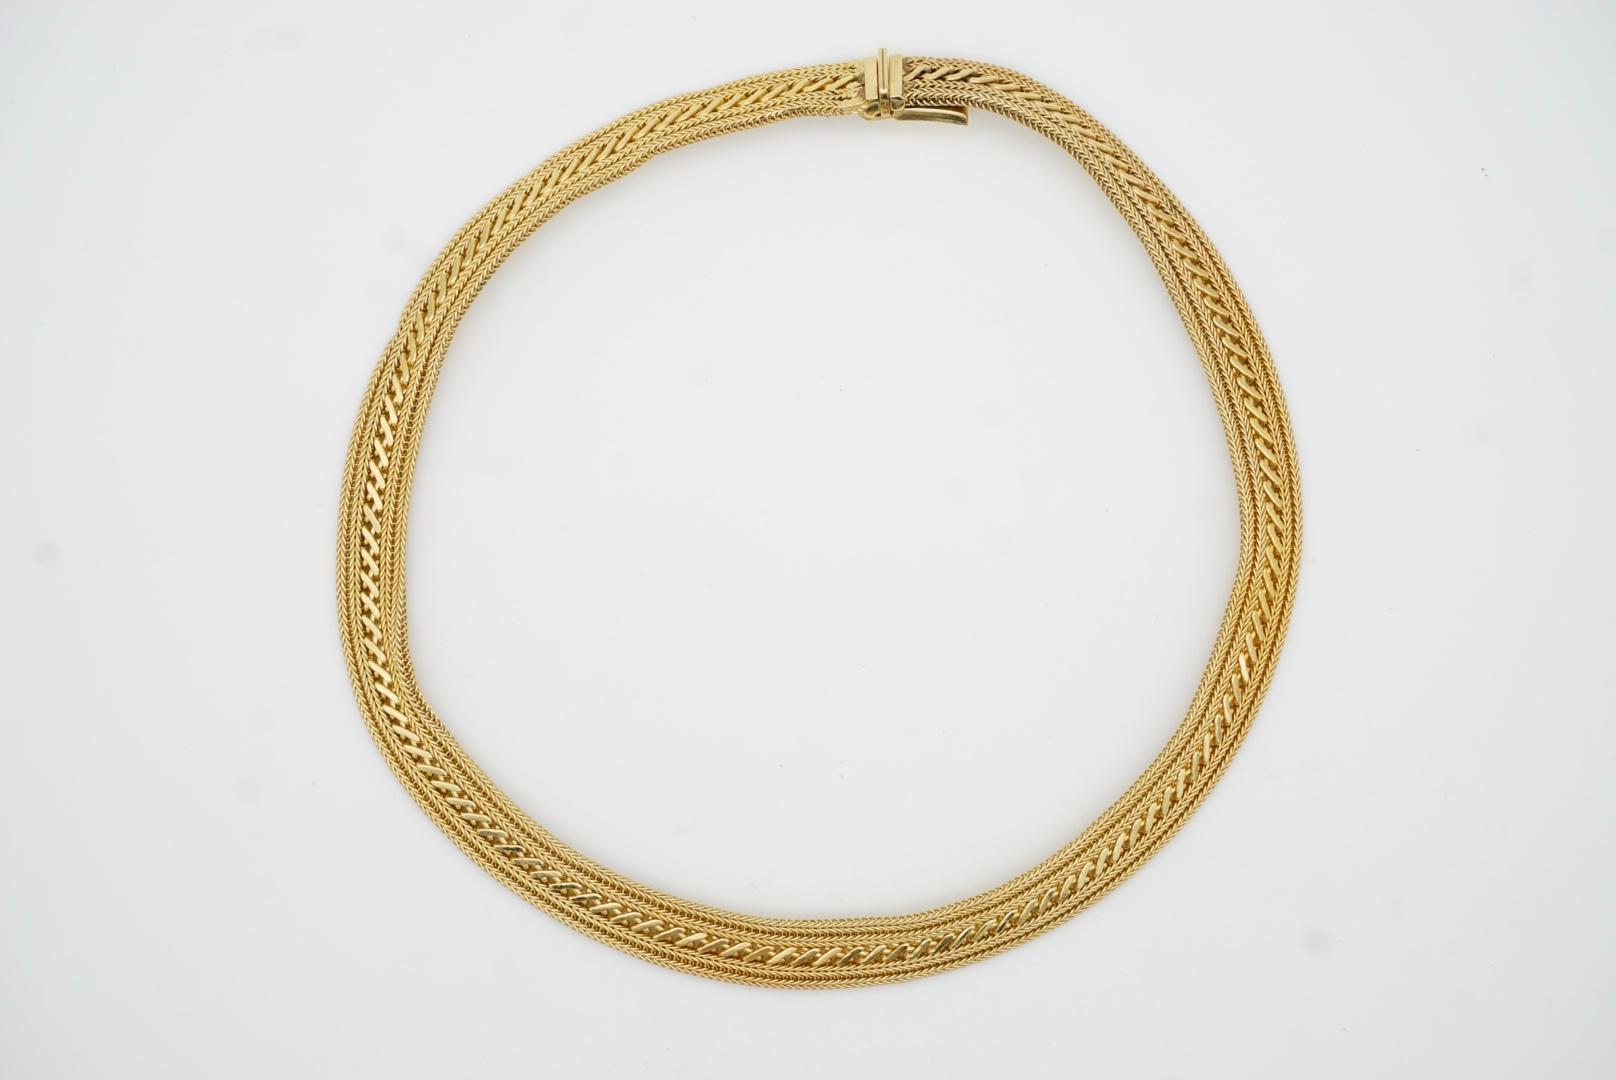 Christian Dior GROSSE 1966 Vintage Interlock Woven Herringbone Openwork Necklace 4